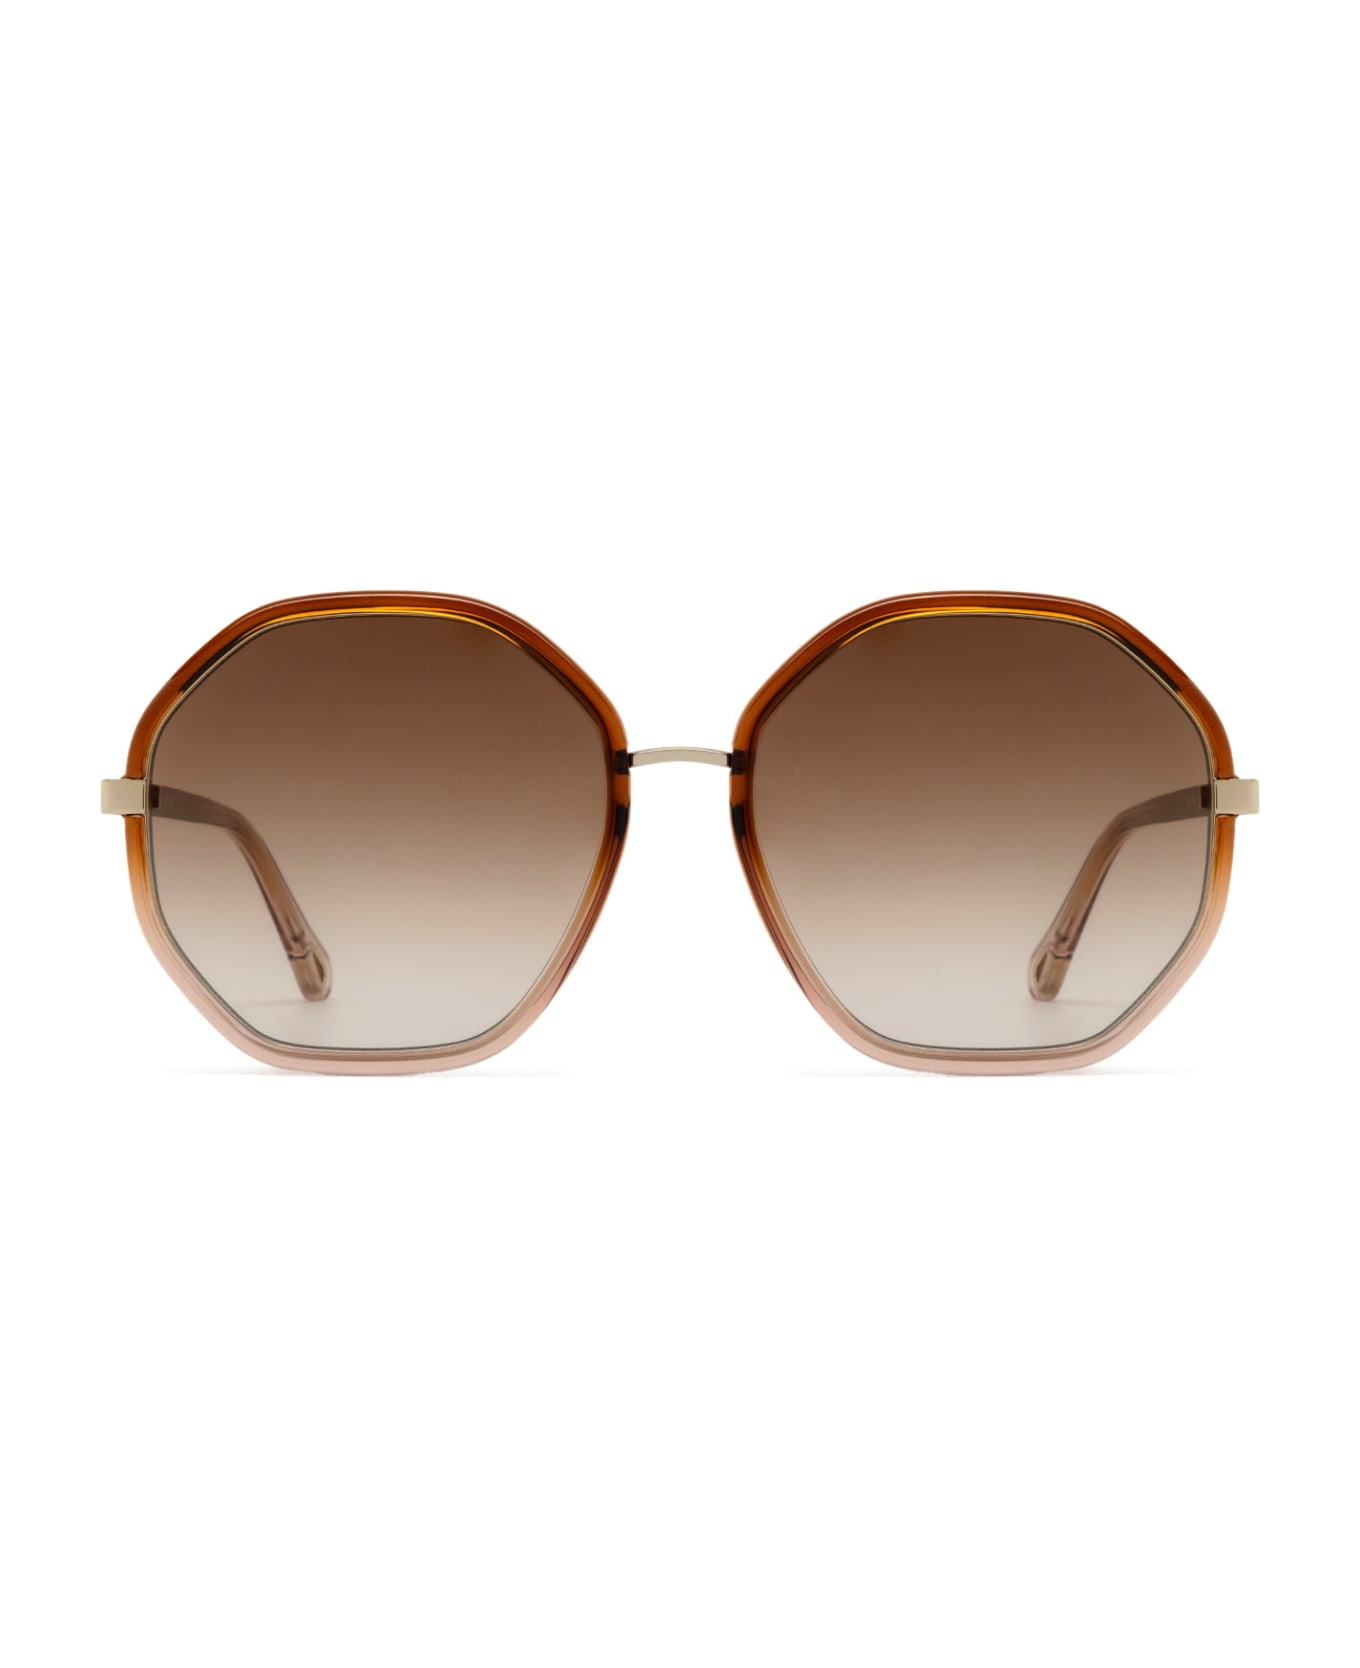 Chloé Eyewear Ch0133sa Brown Sunglasses - Brown